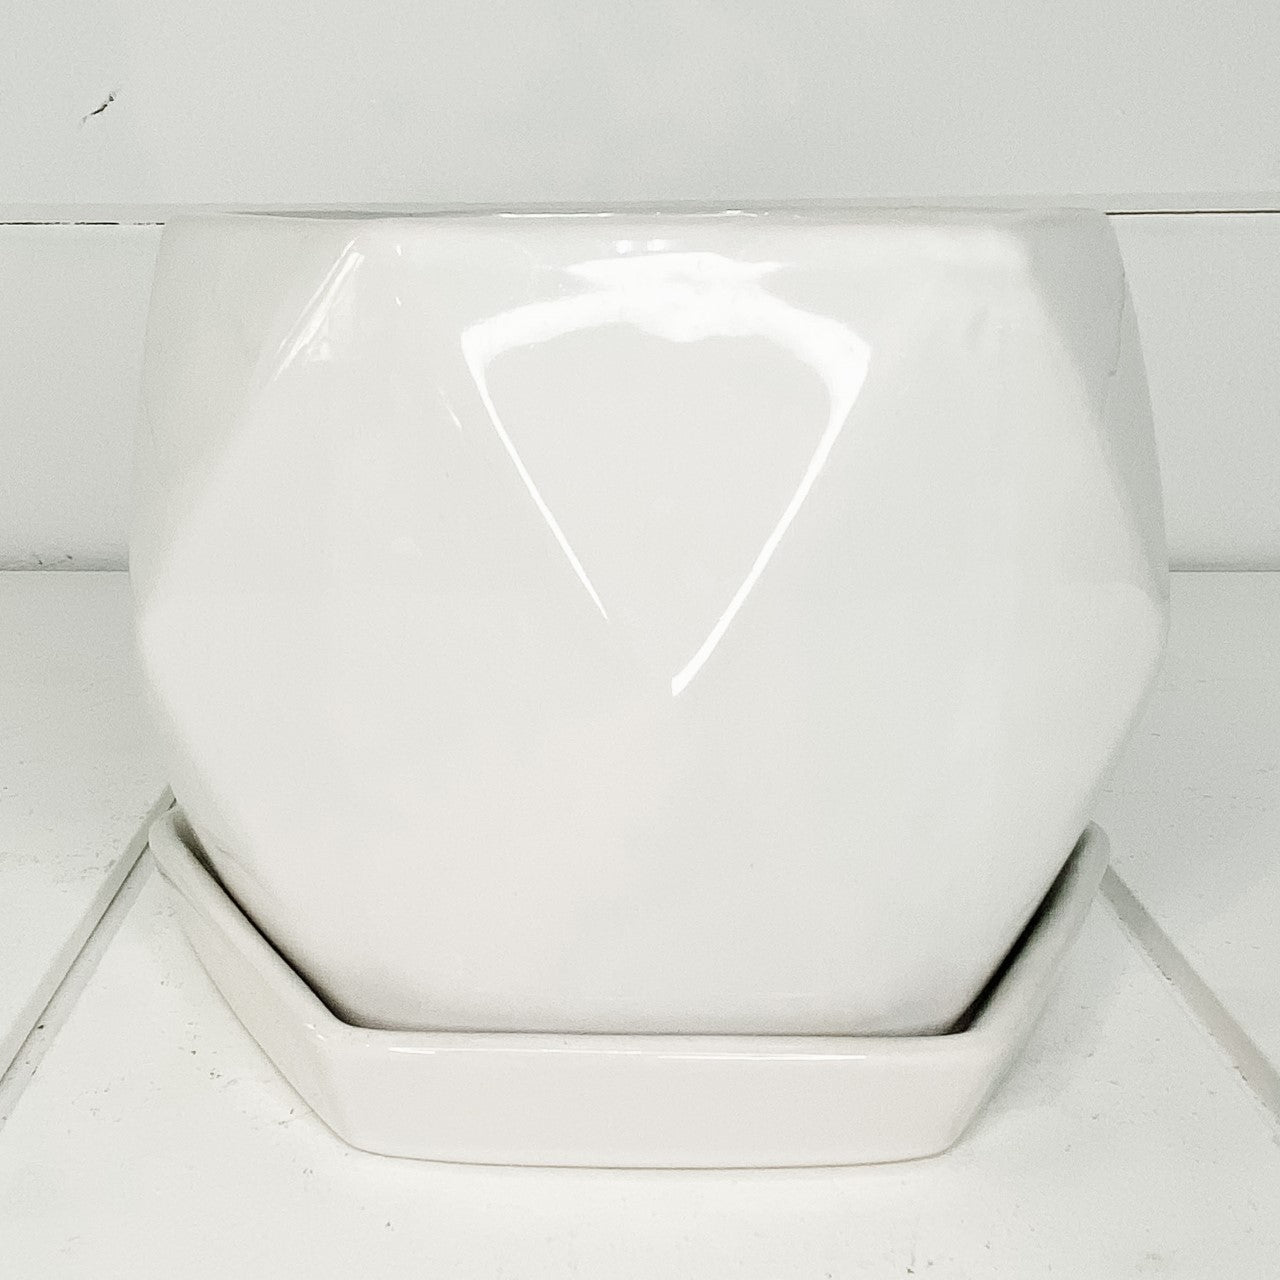 White hexagonal ceramic pot with saucer